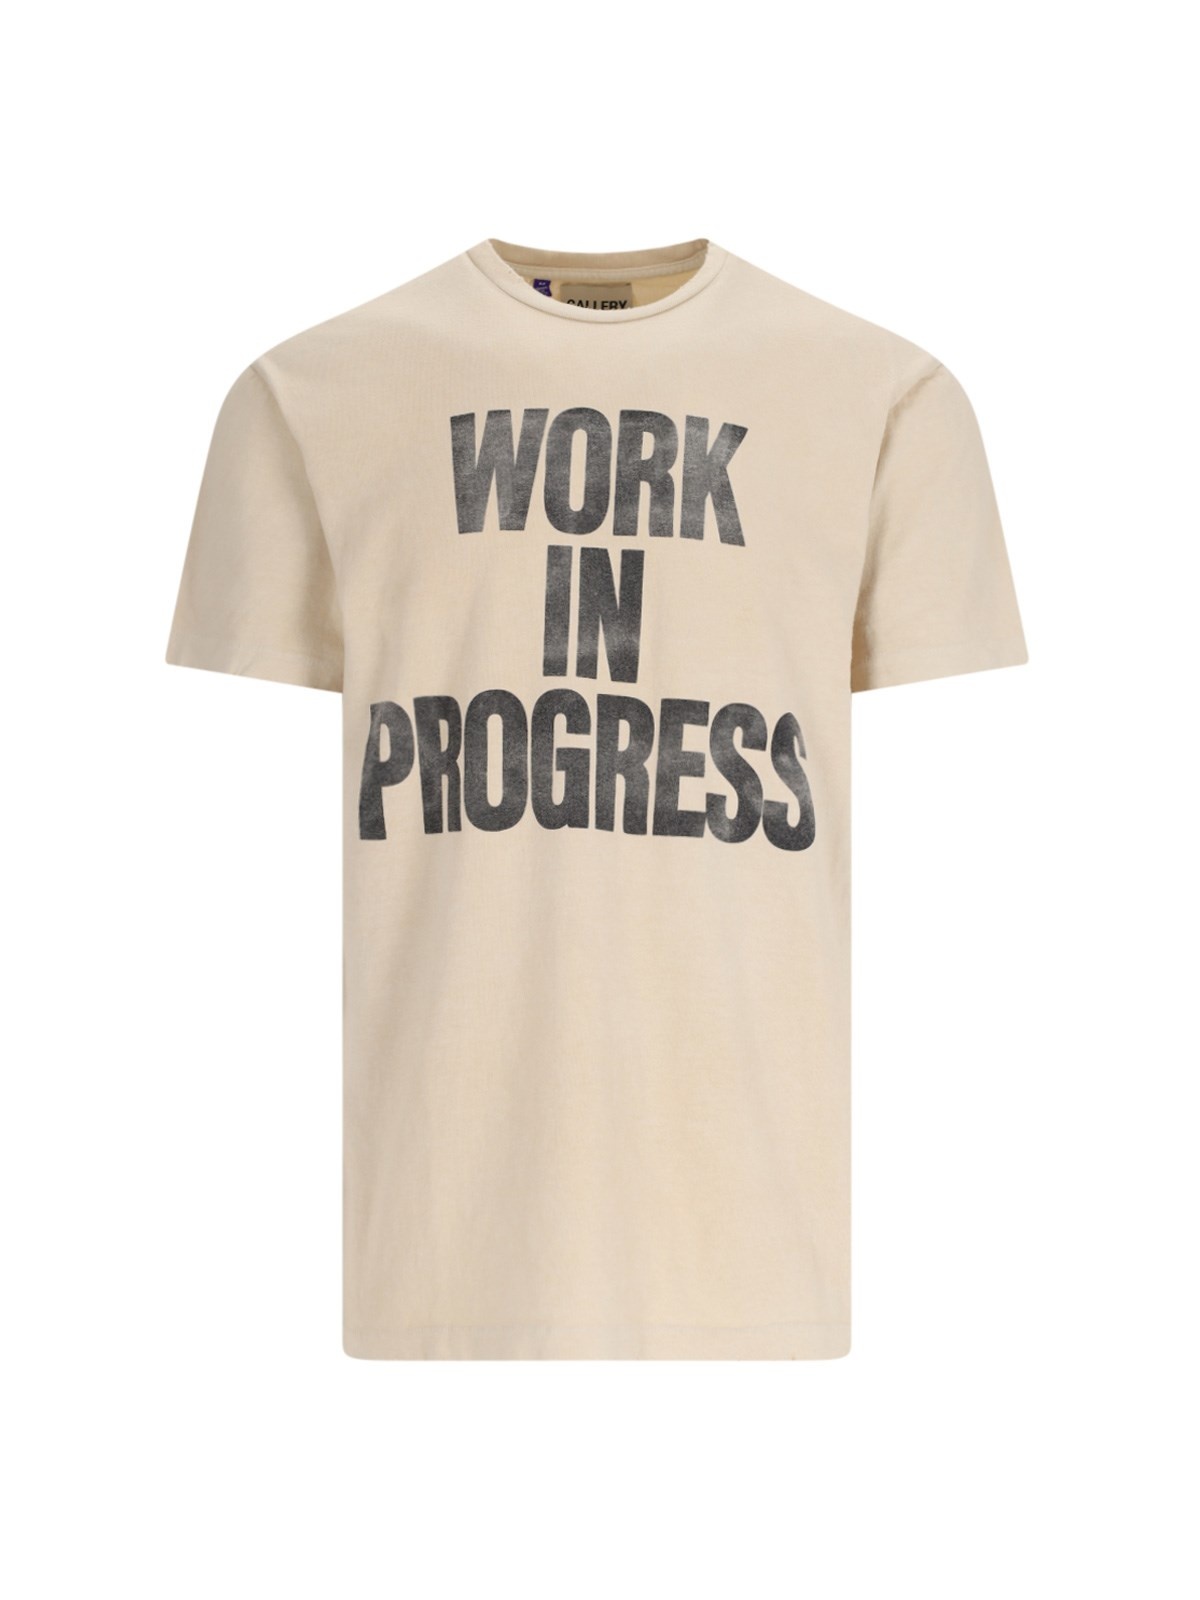 'WORK IN PROGRESS' T-SHIRT - 1